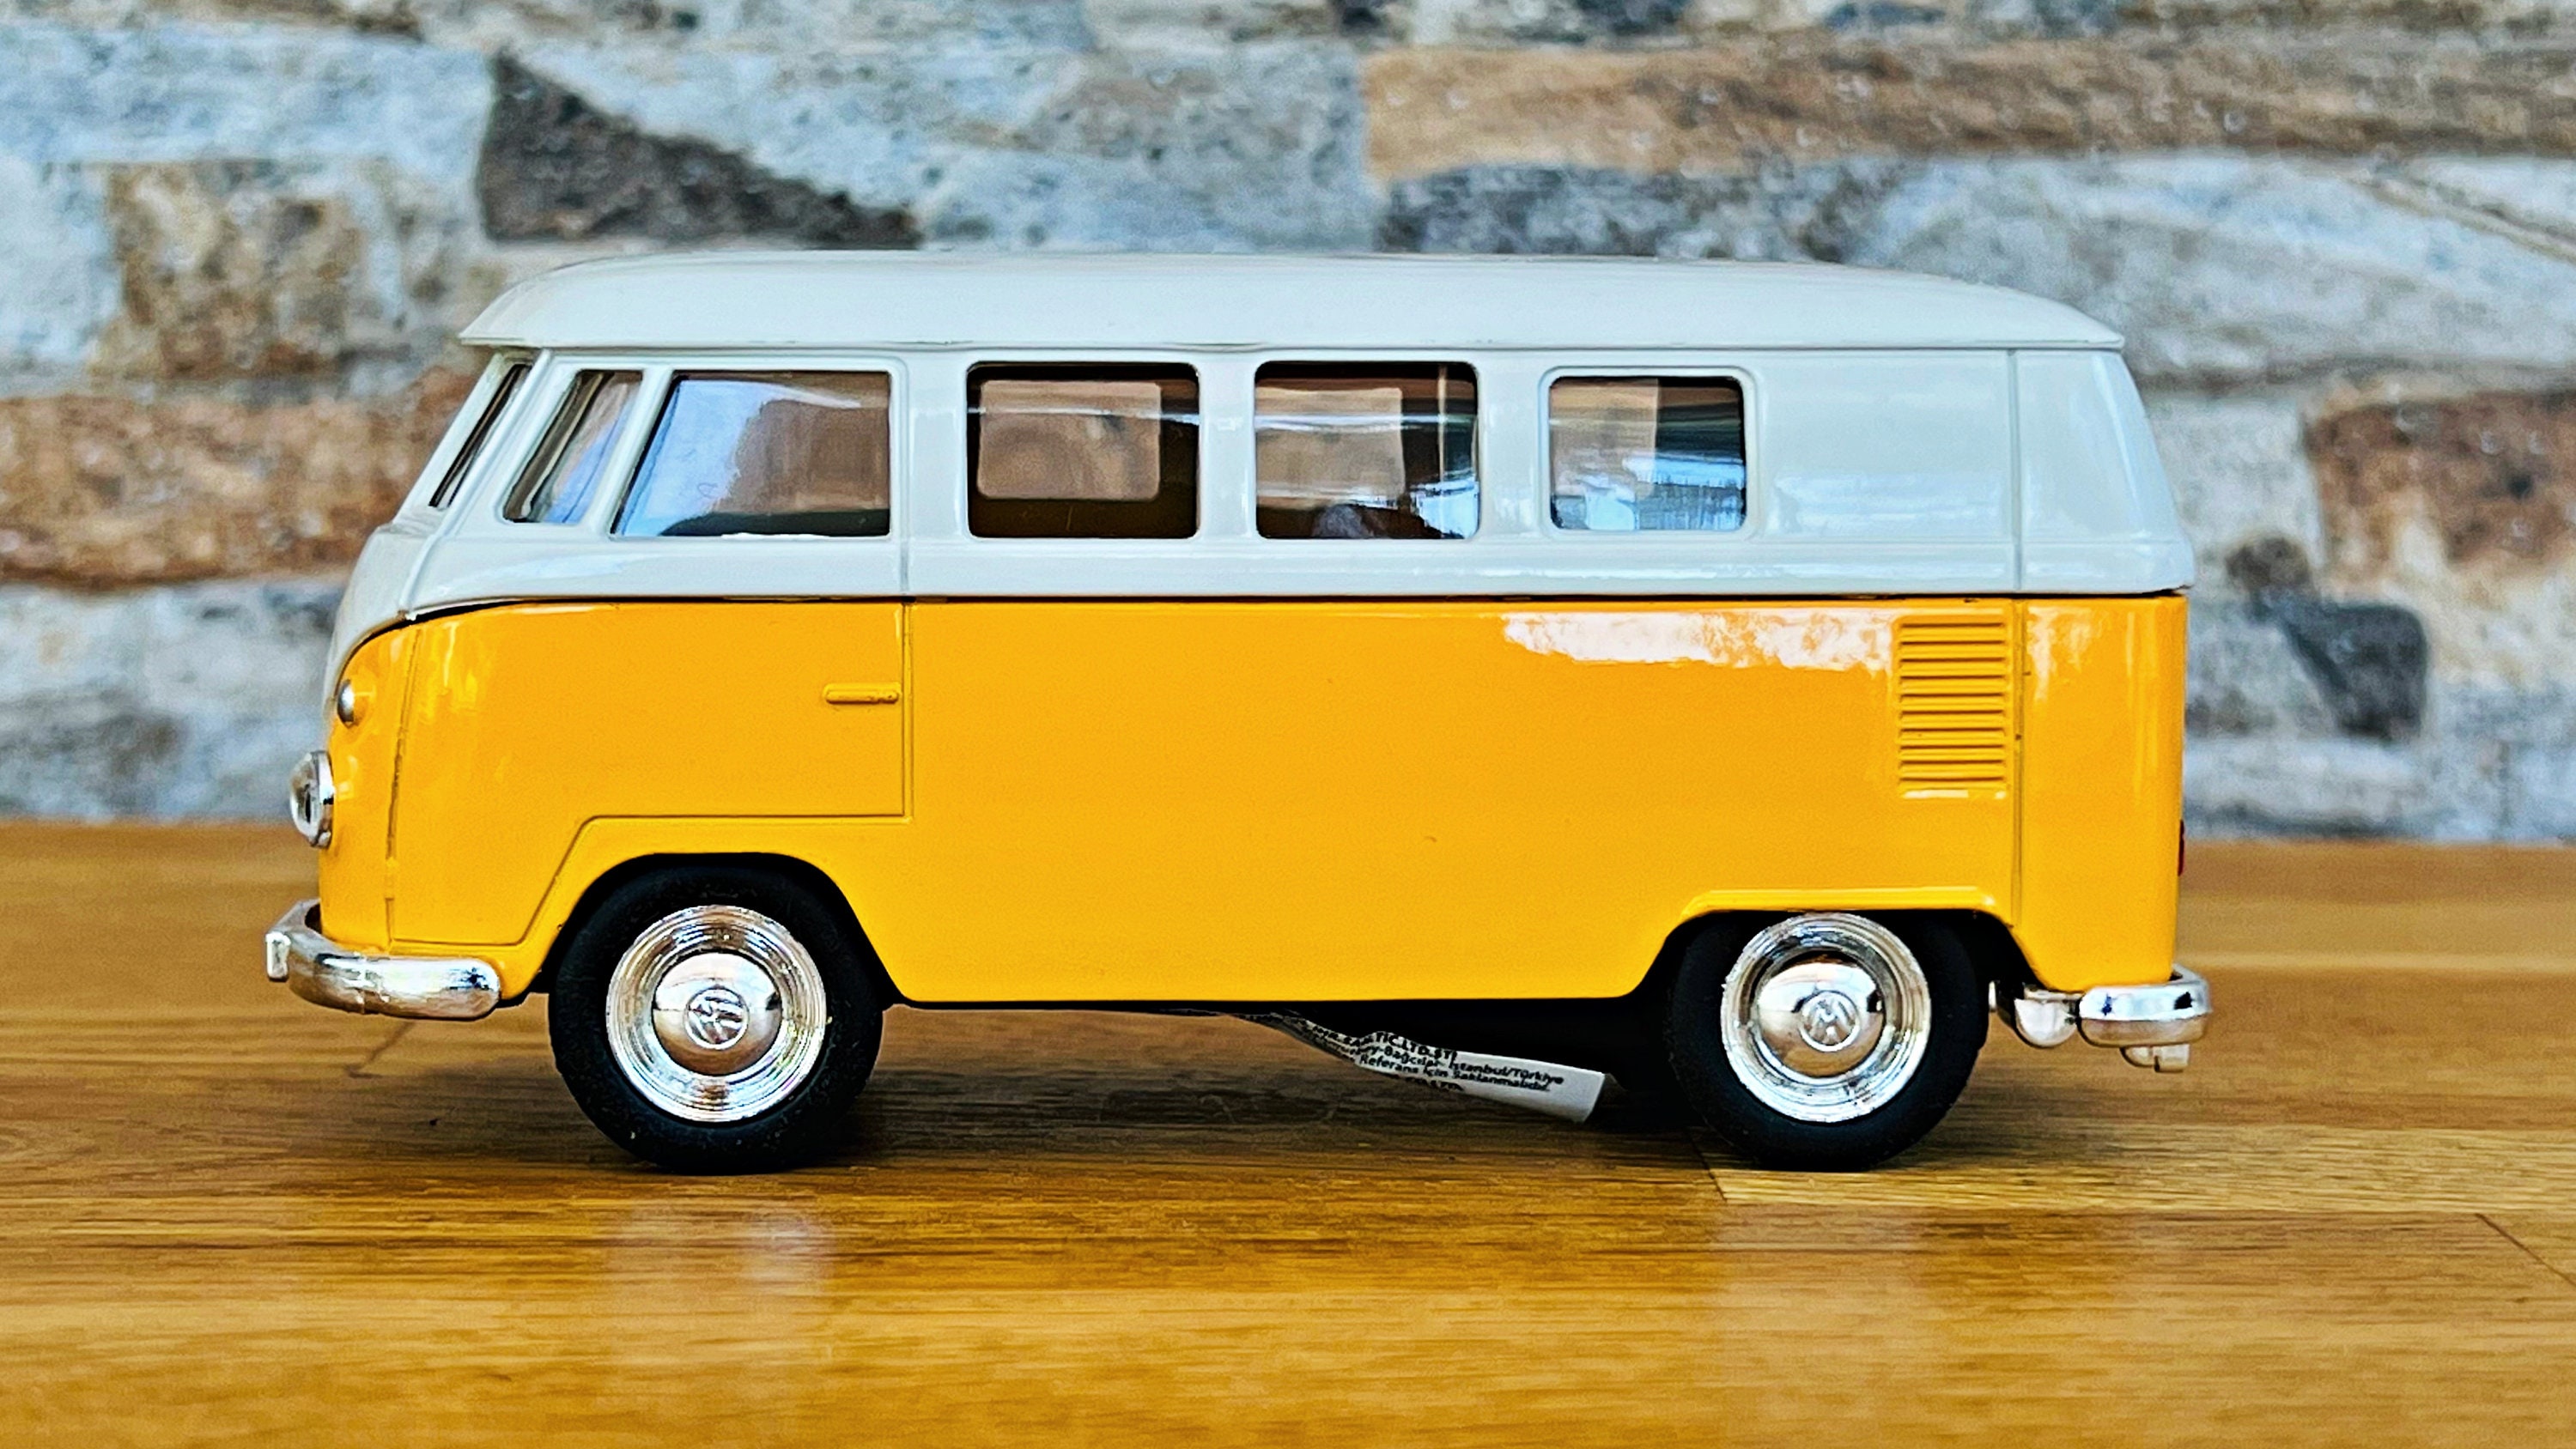 Collector´s Edition - VW Bulli T1 1963 - Lizensiertes Produkt